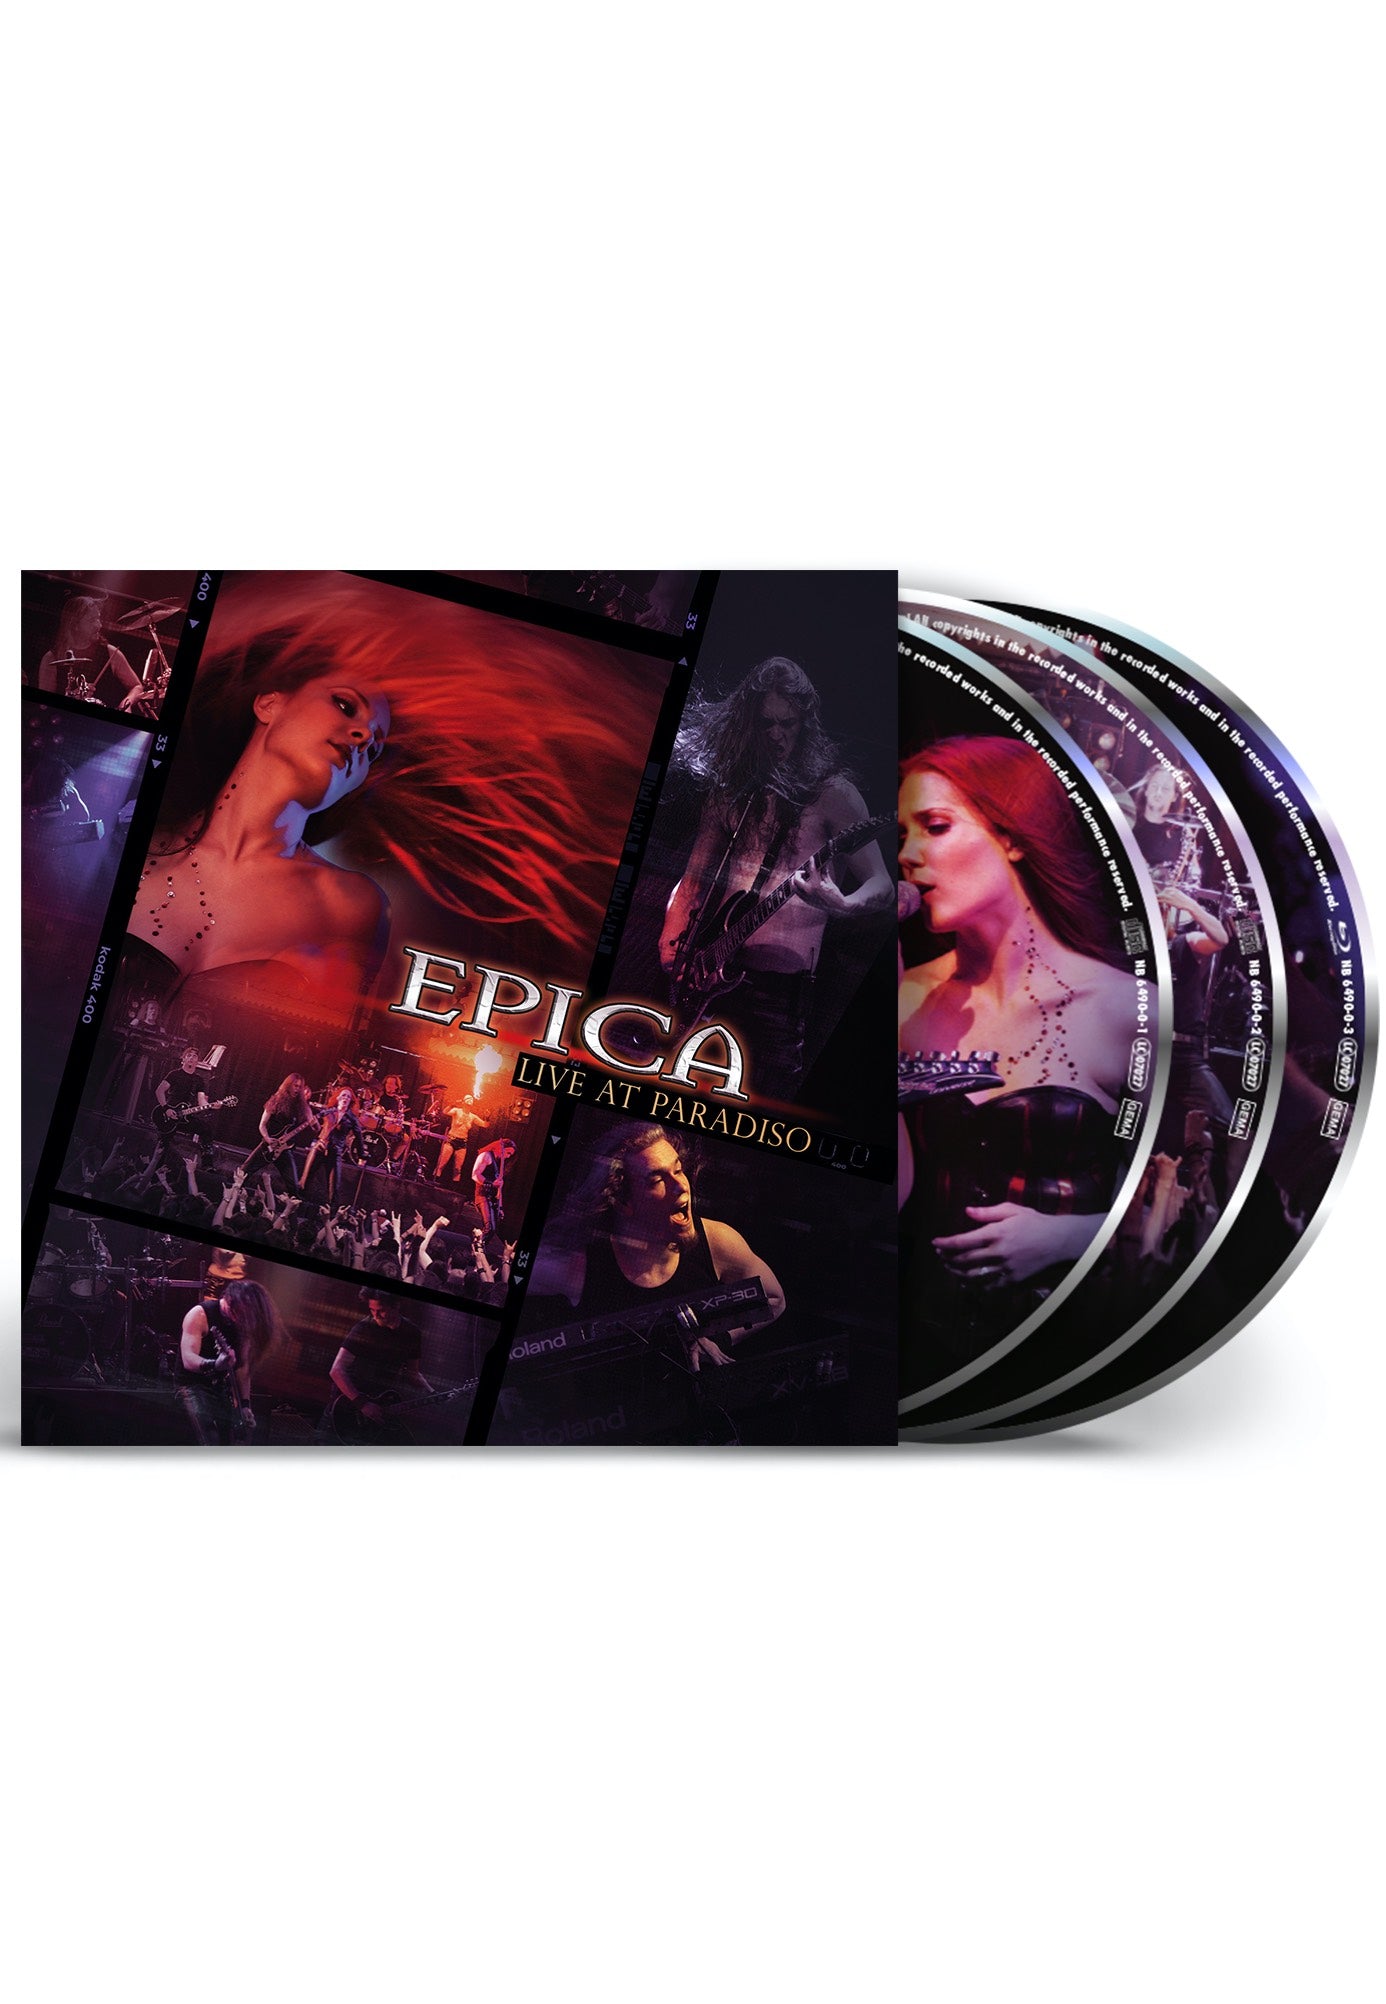 Epica - Live At Paradiso Ltd. - Digipak 2 CD + Blu Ray